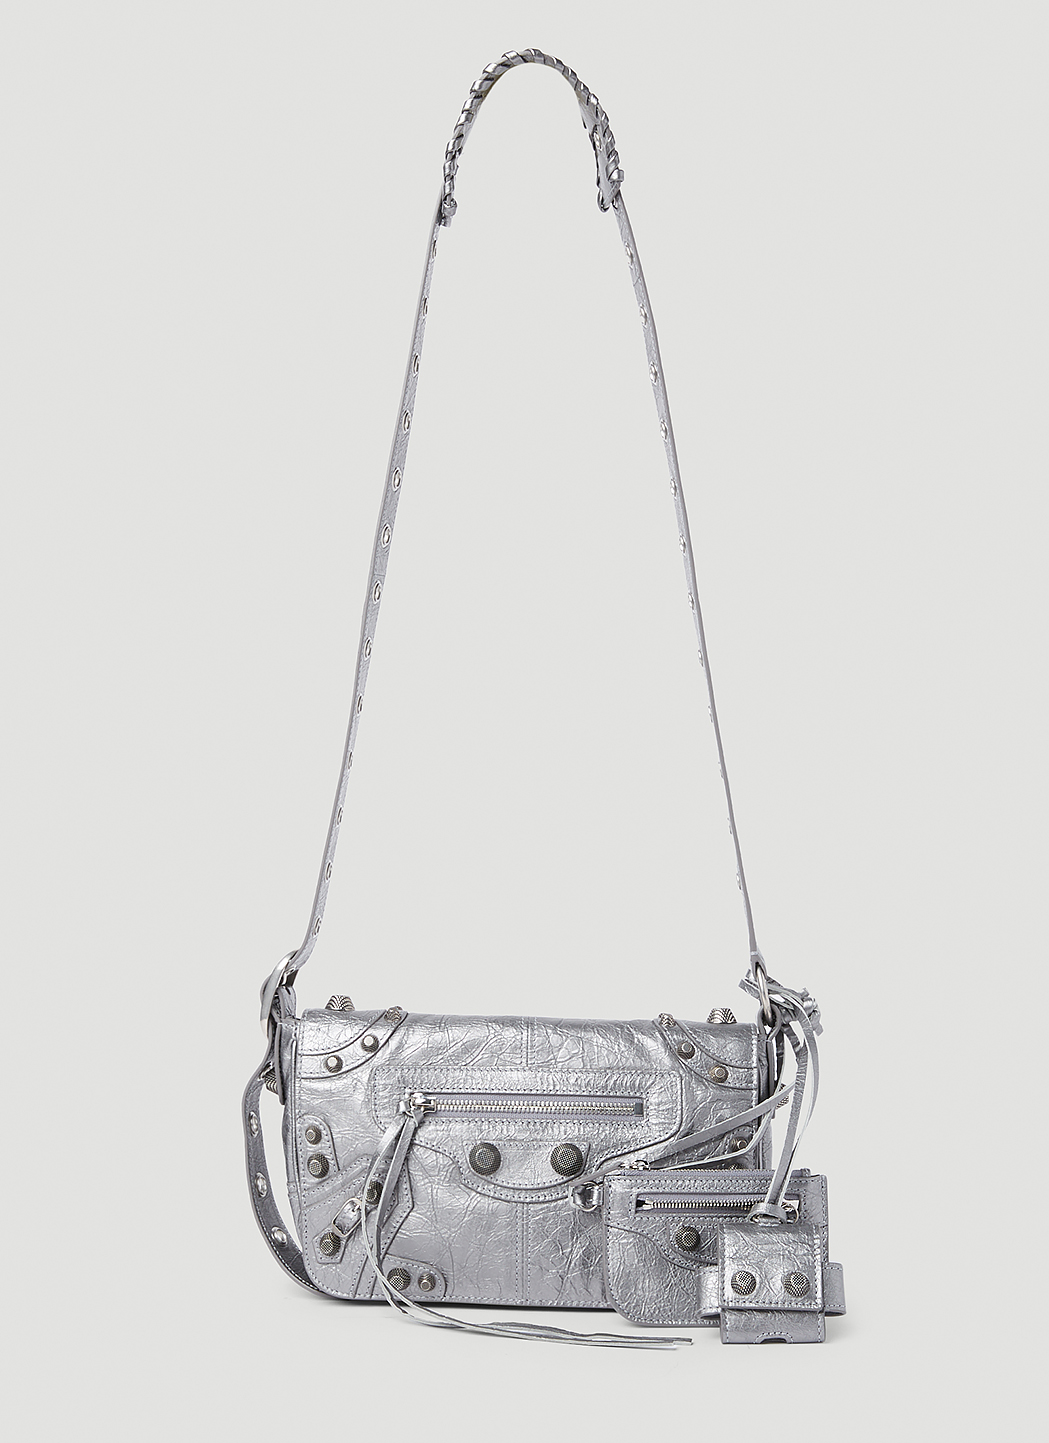 Balenciaga Limited Edition Micro Silver City Crossbody Bag  I MISS YOU  VINTAGE